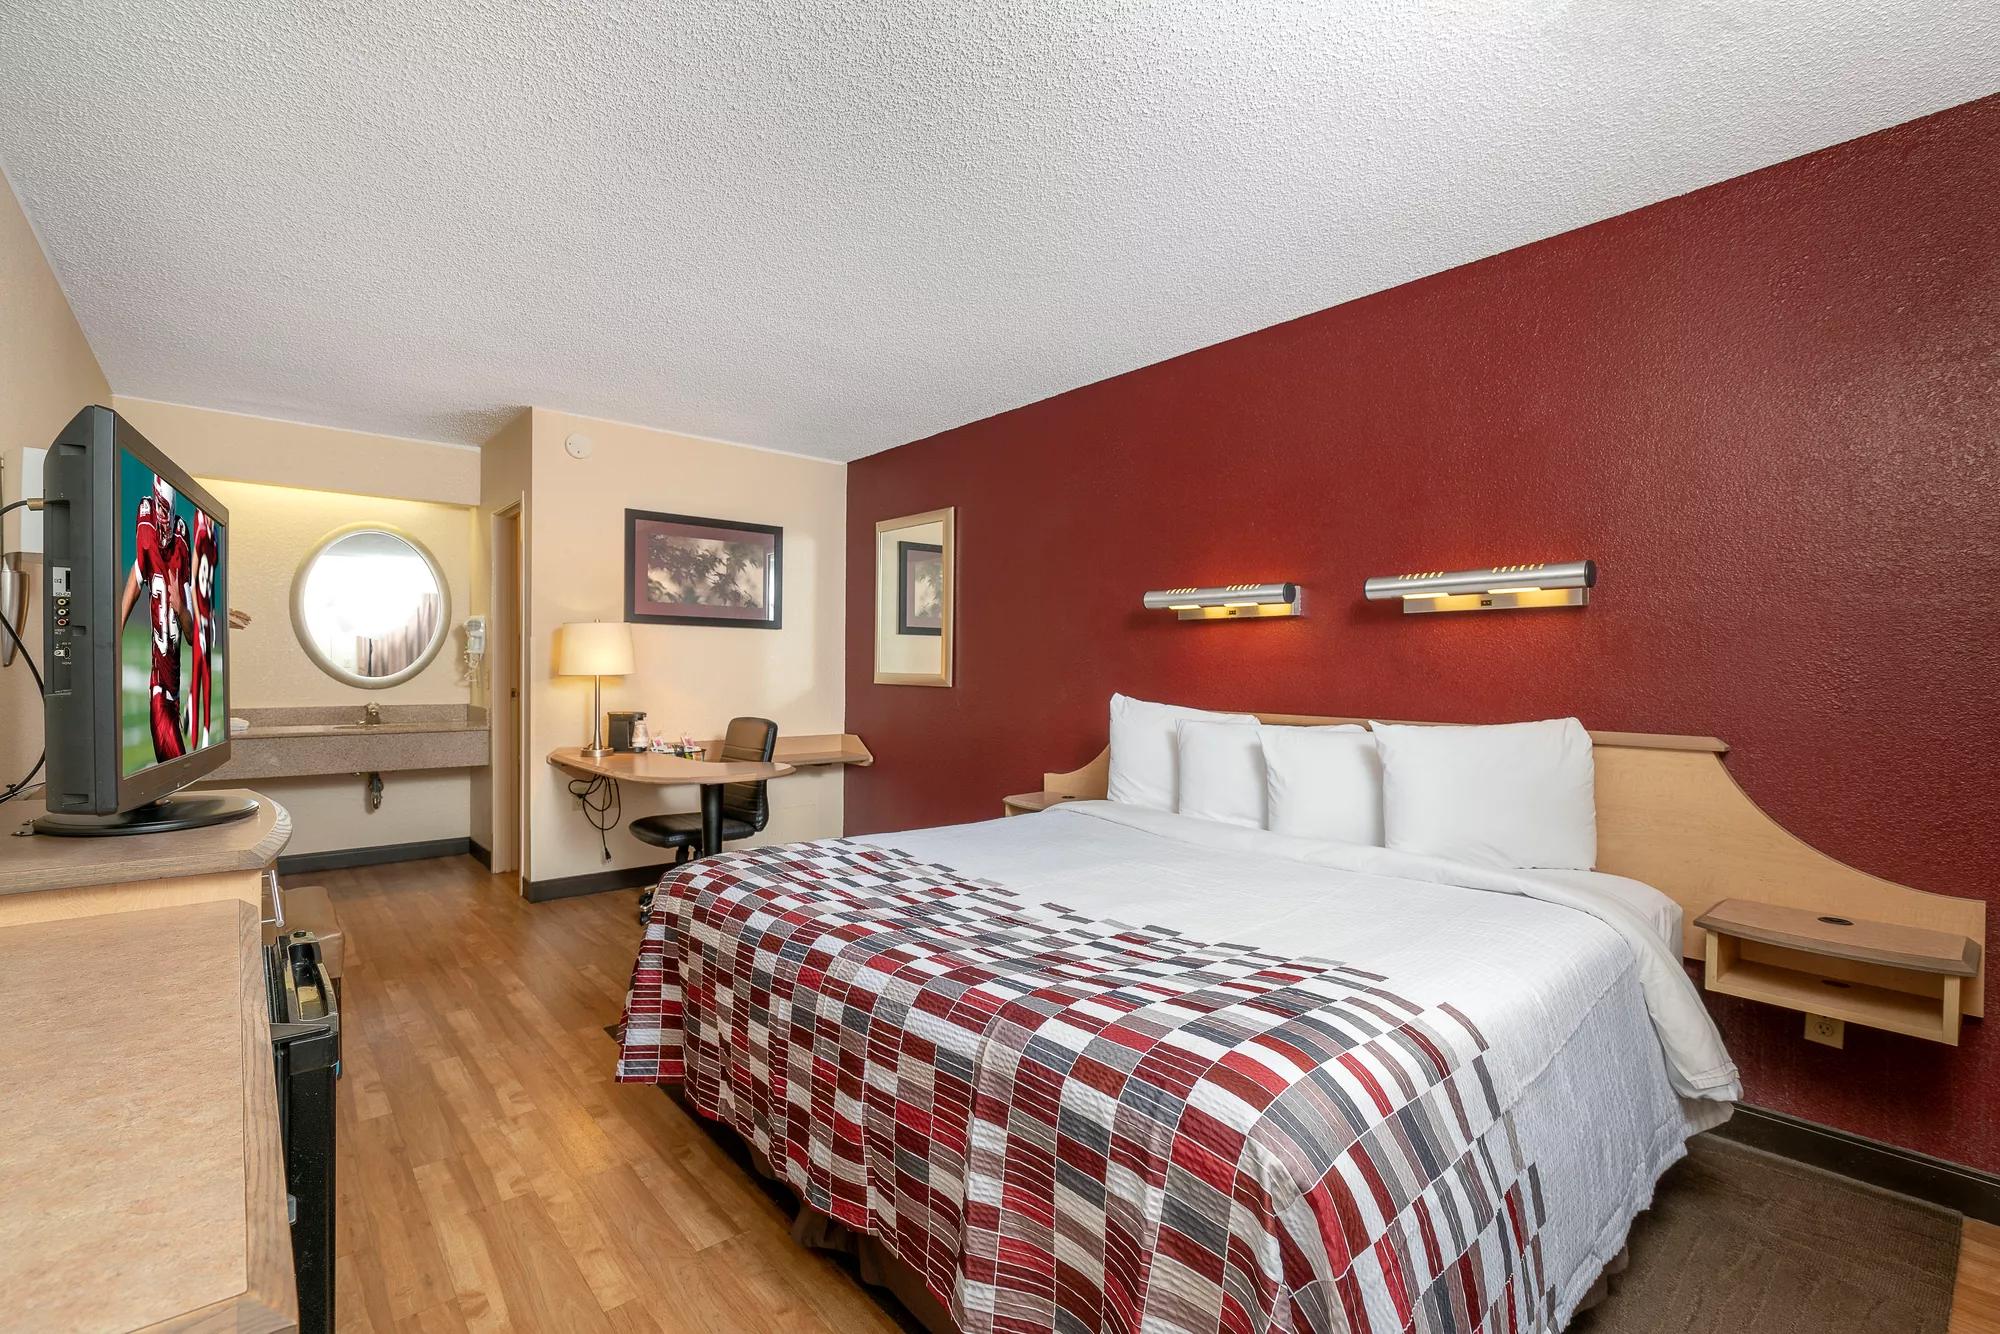 Red Roof Inn Buffalo - Niagara Airport Superior King Room Image Details